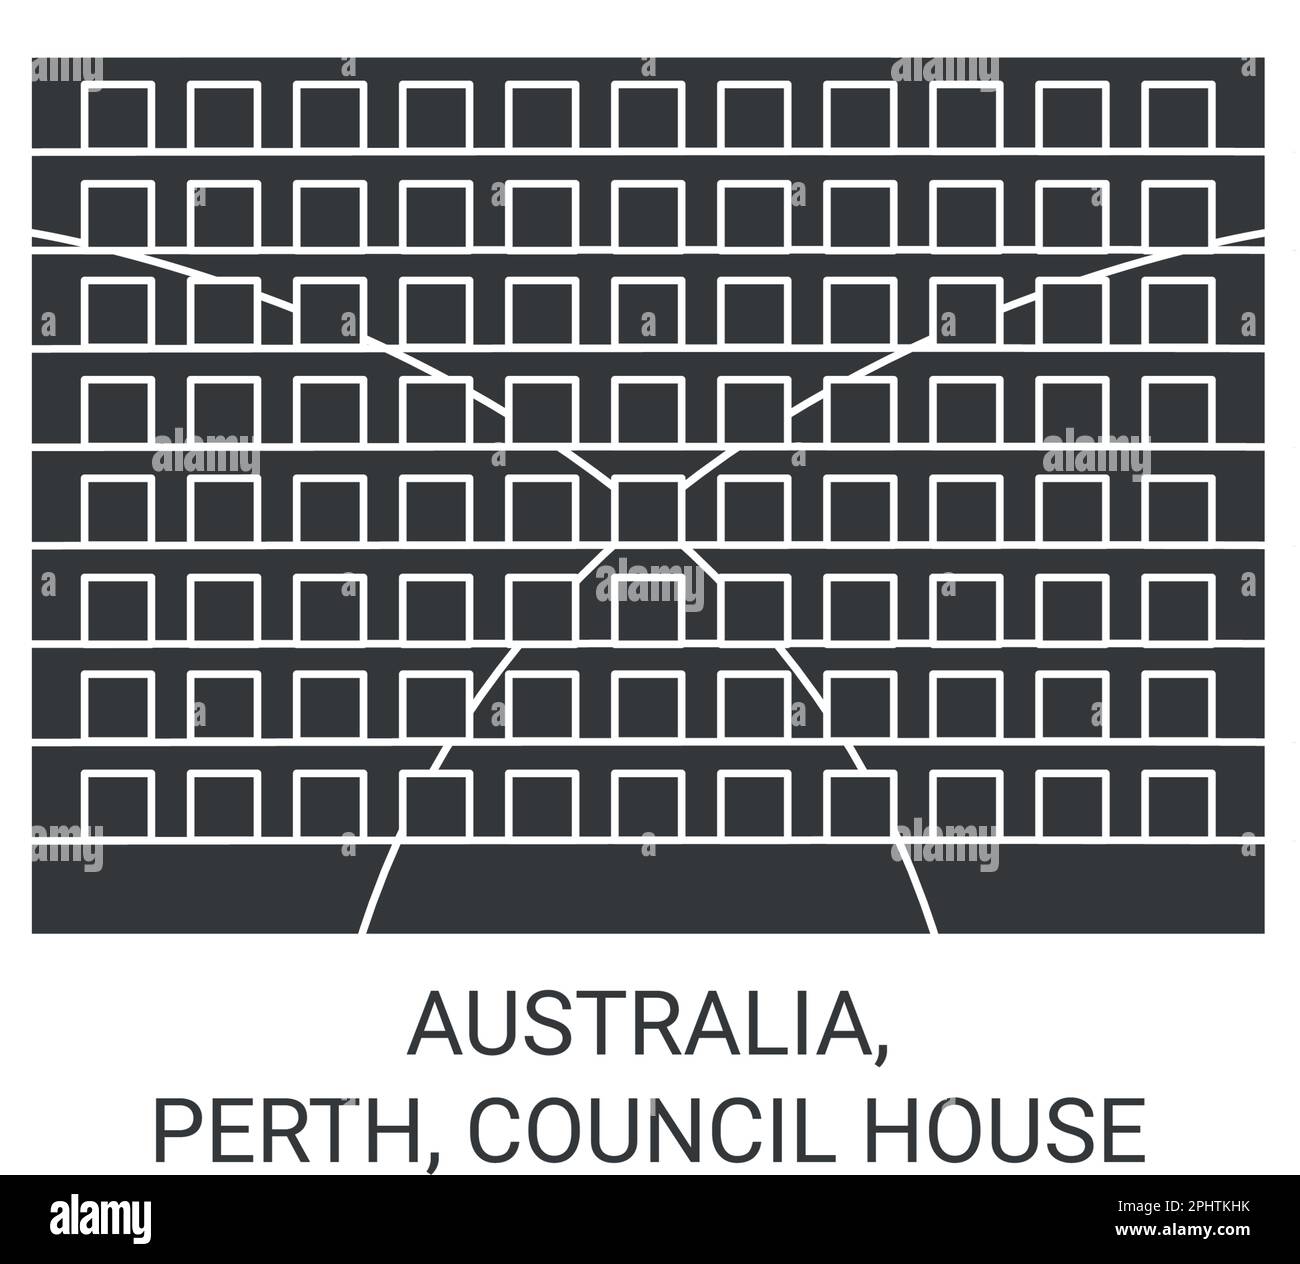 Australia, Perth, Council House travel landmark vector illustration Stock Vector